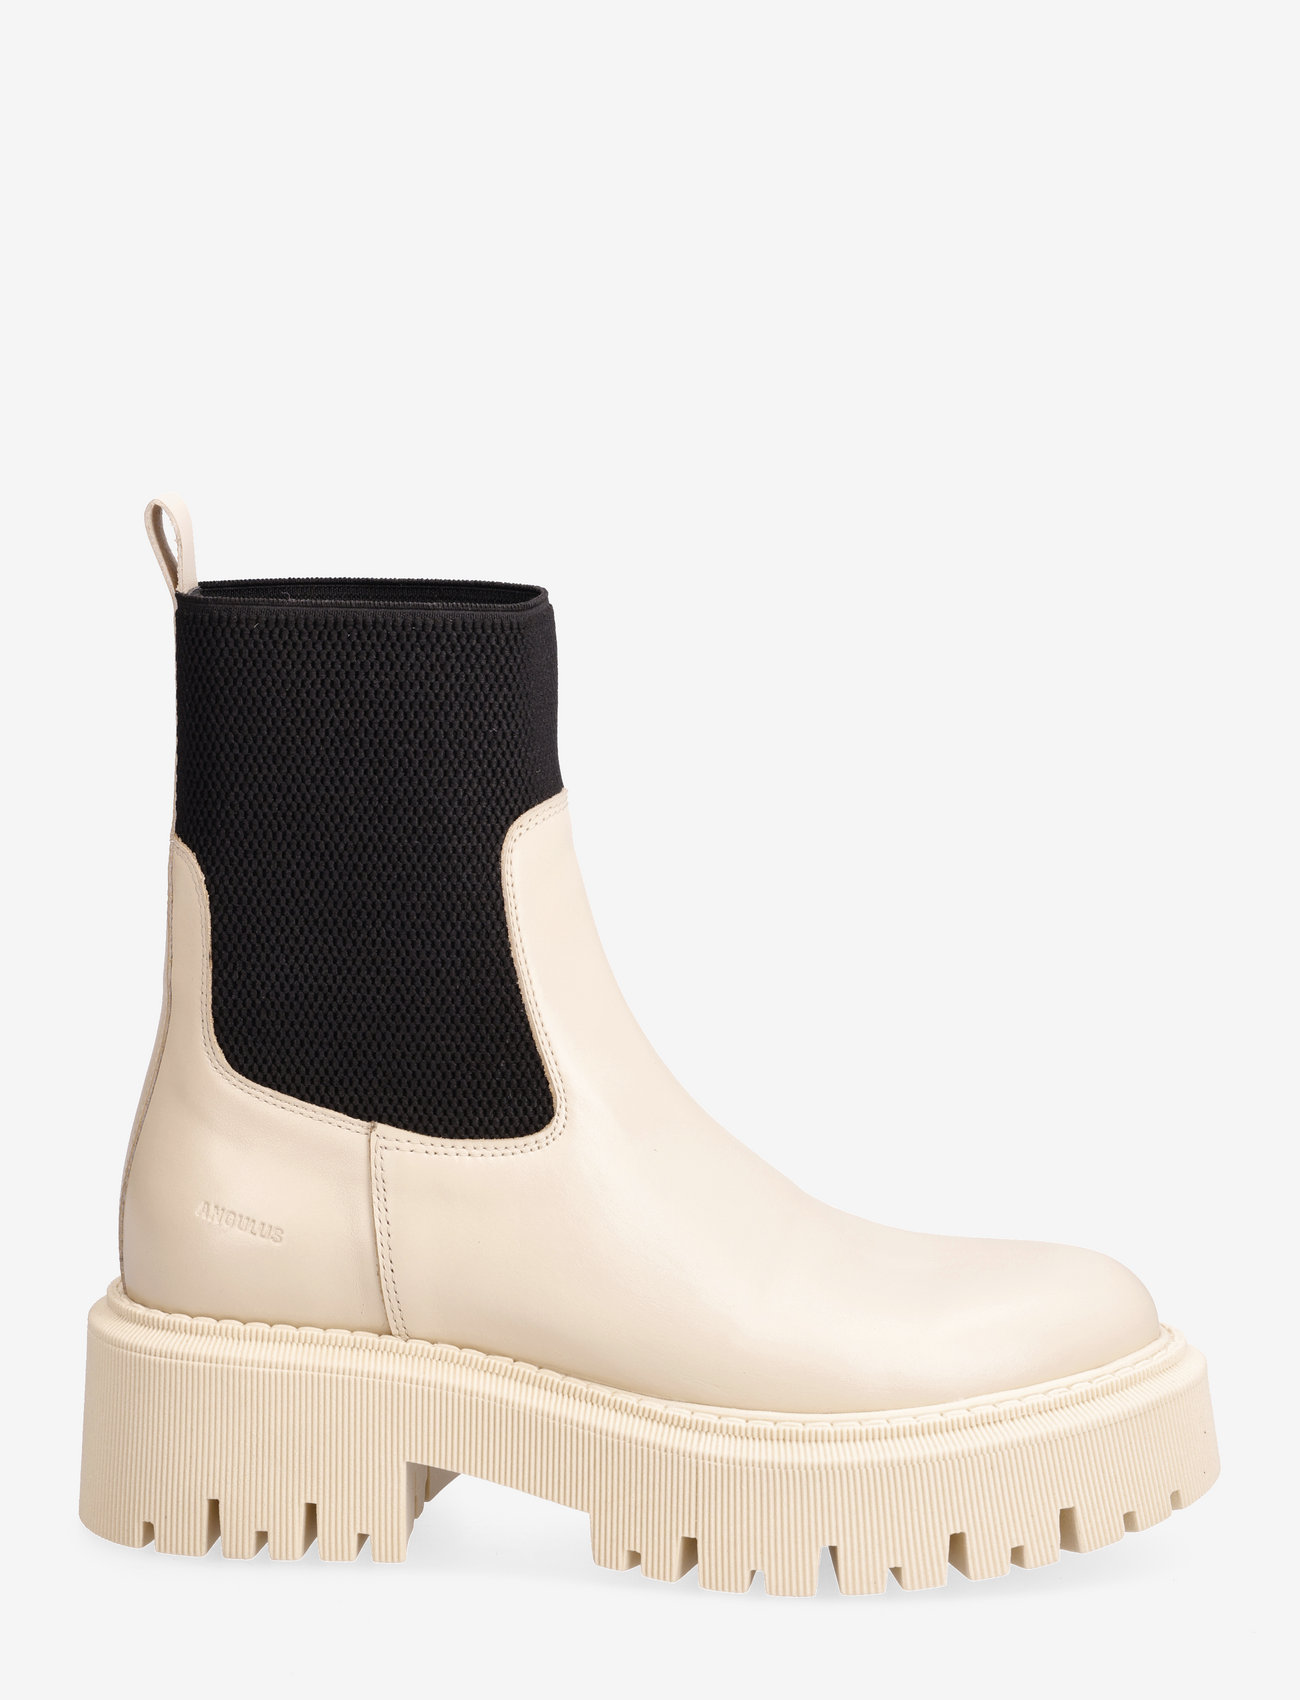 ANGULUS - Boots - flat - niski obcas - 1502/053 buttermilk/black - 1